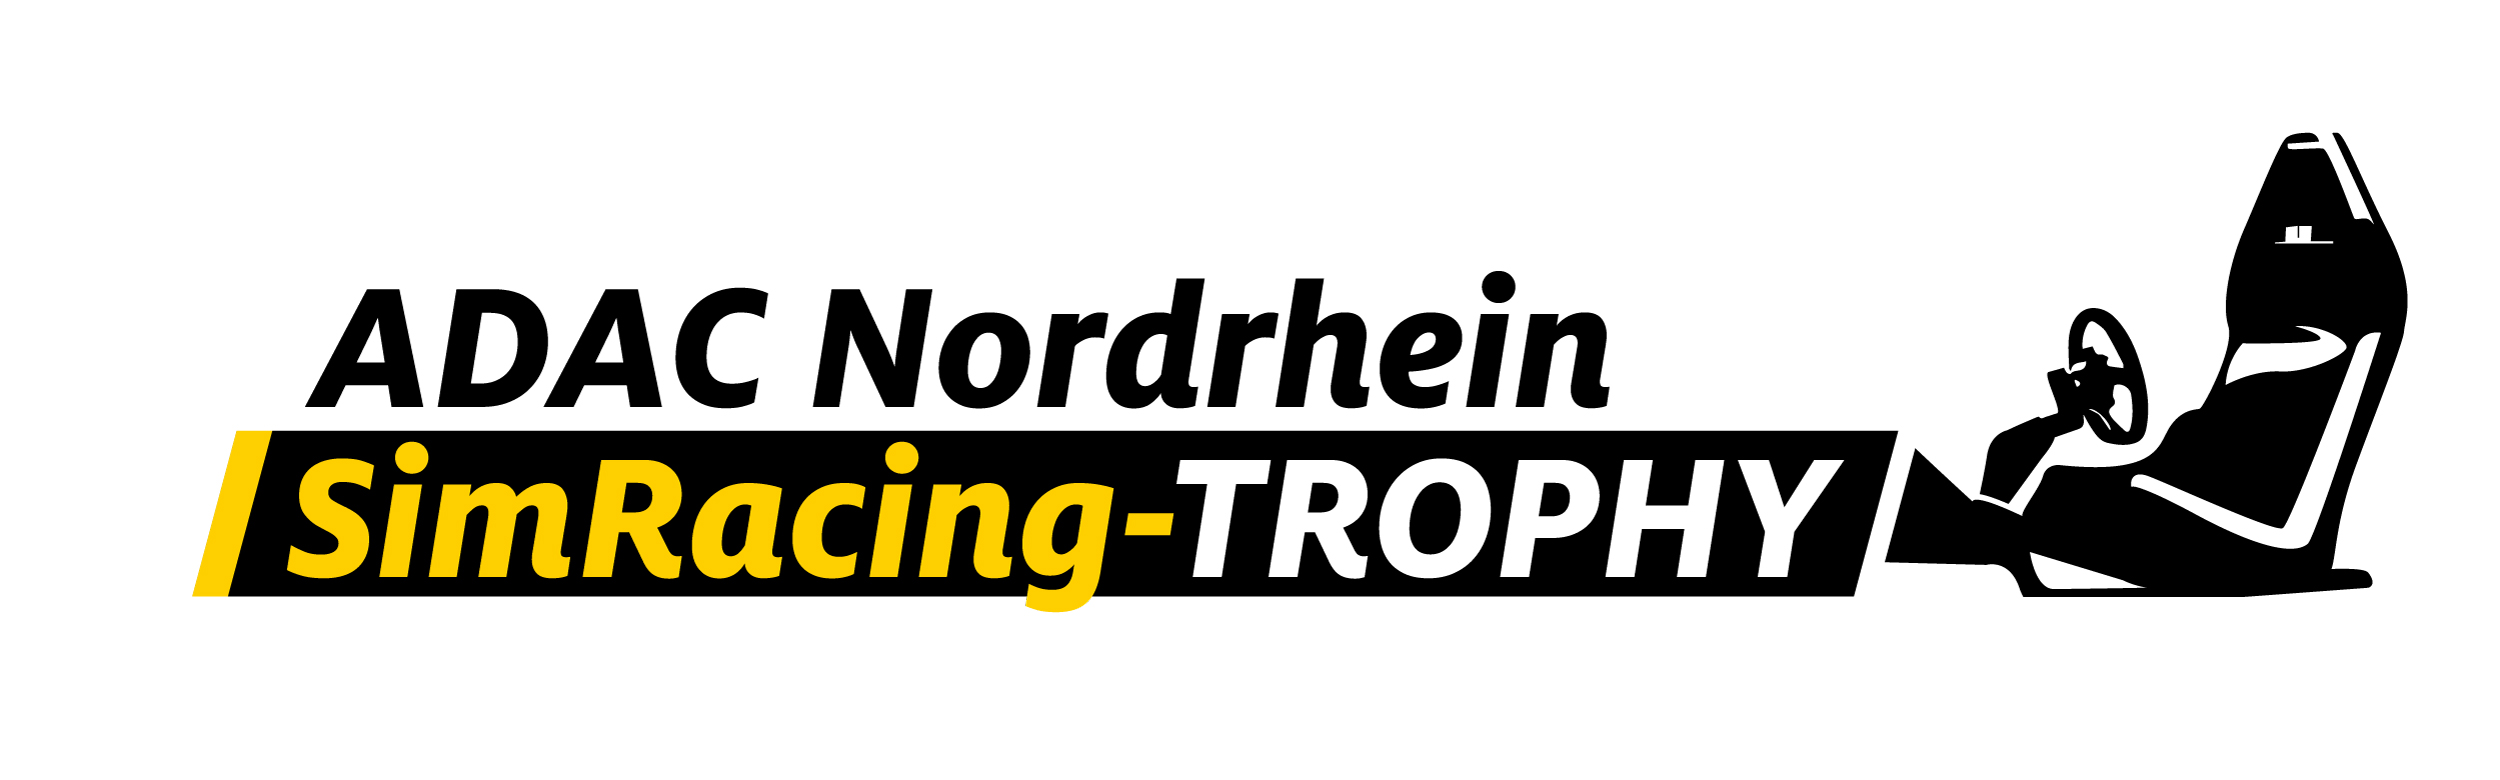 ADAC Nordrhein SimRacing-Trophy Winter Series